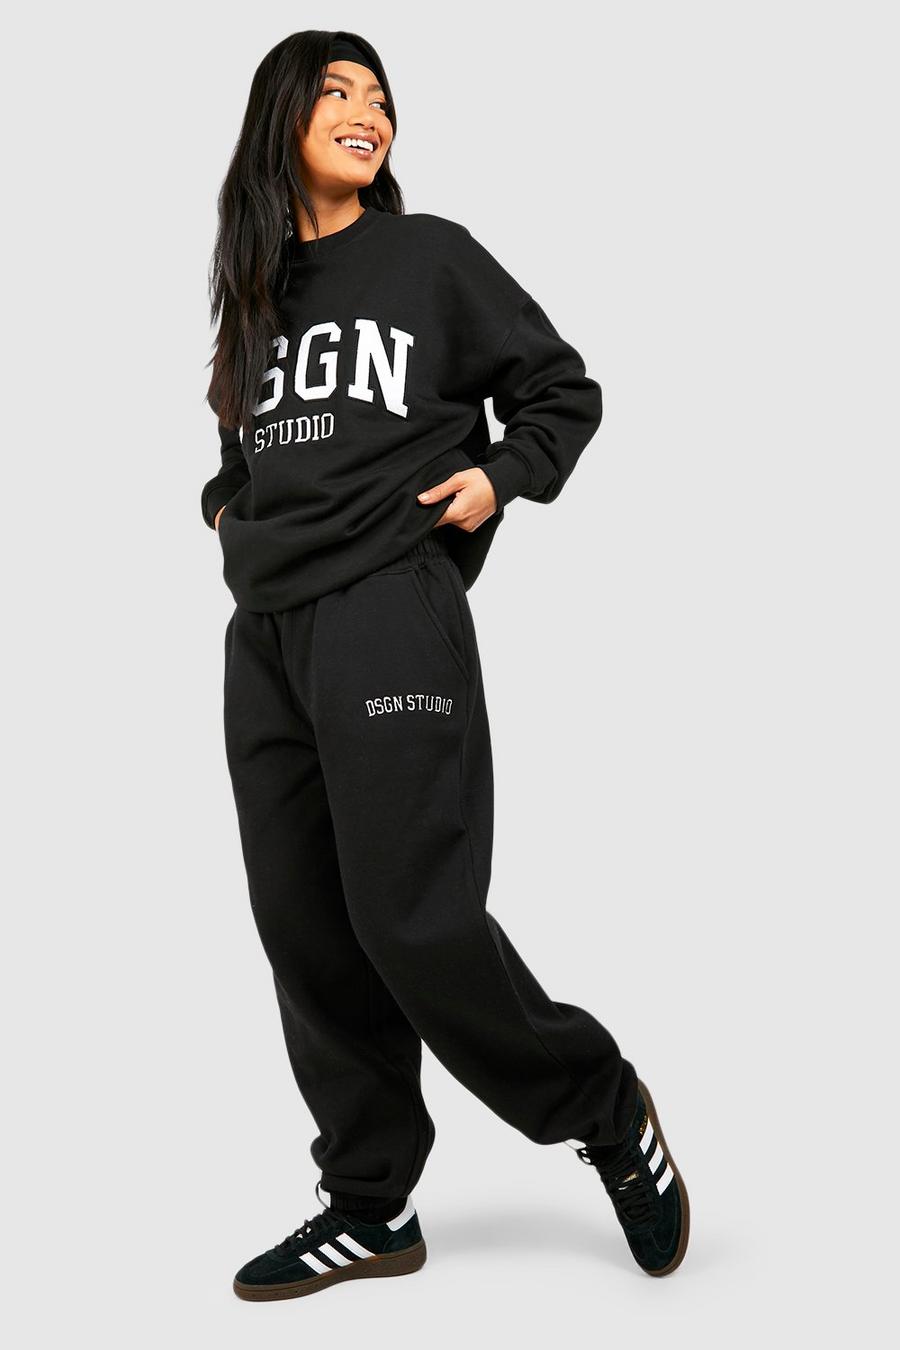 Pantalón deportivo oversize con aplique Dsgn Studio, Black negro